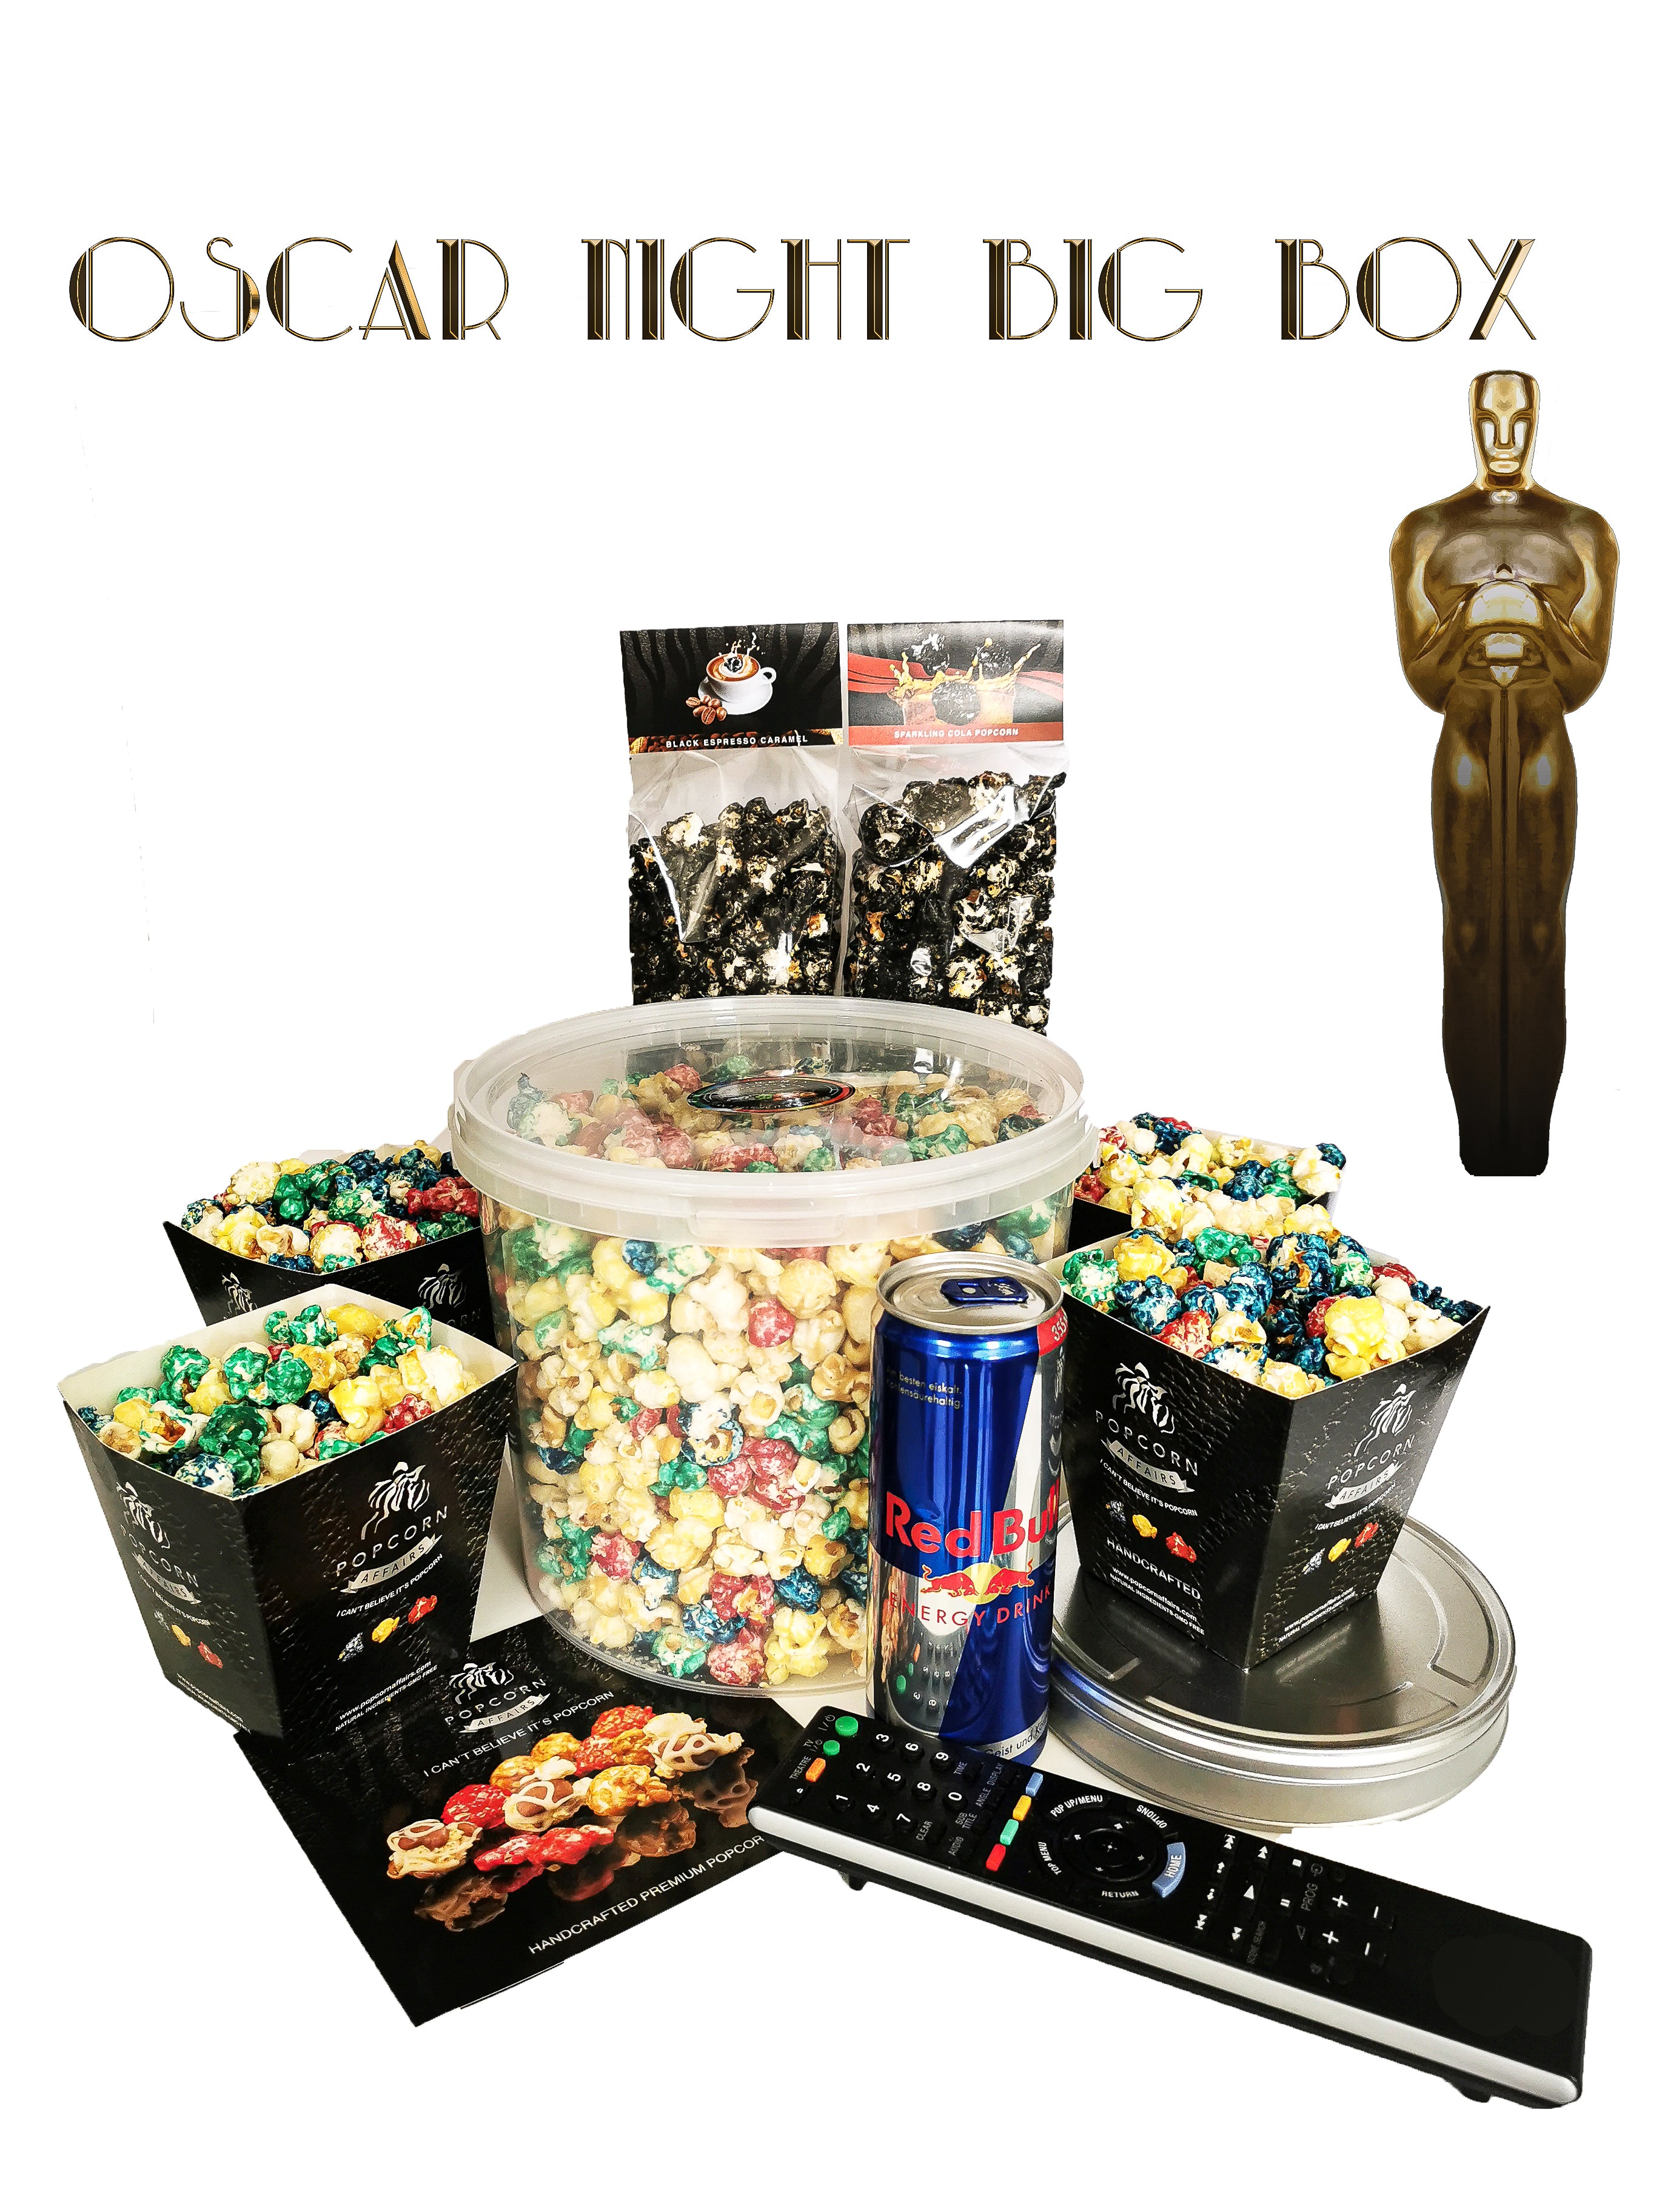 Popcorn Big Box Oscar (Filme Abend) Night